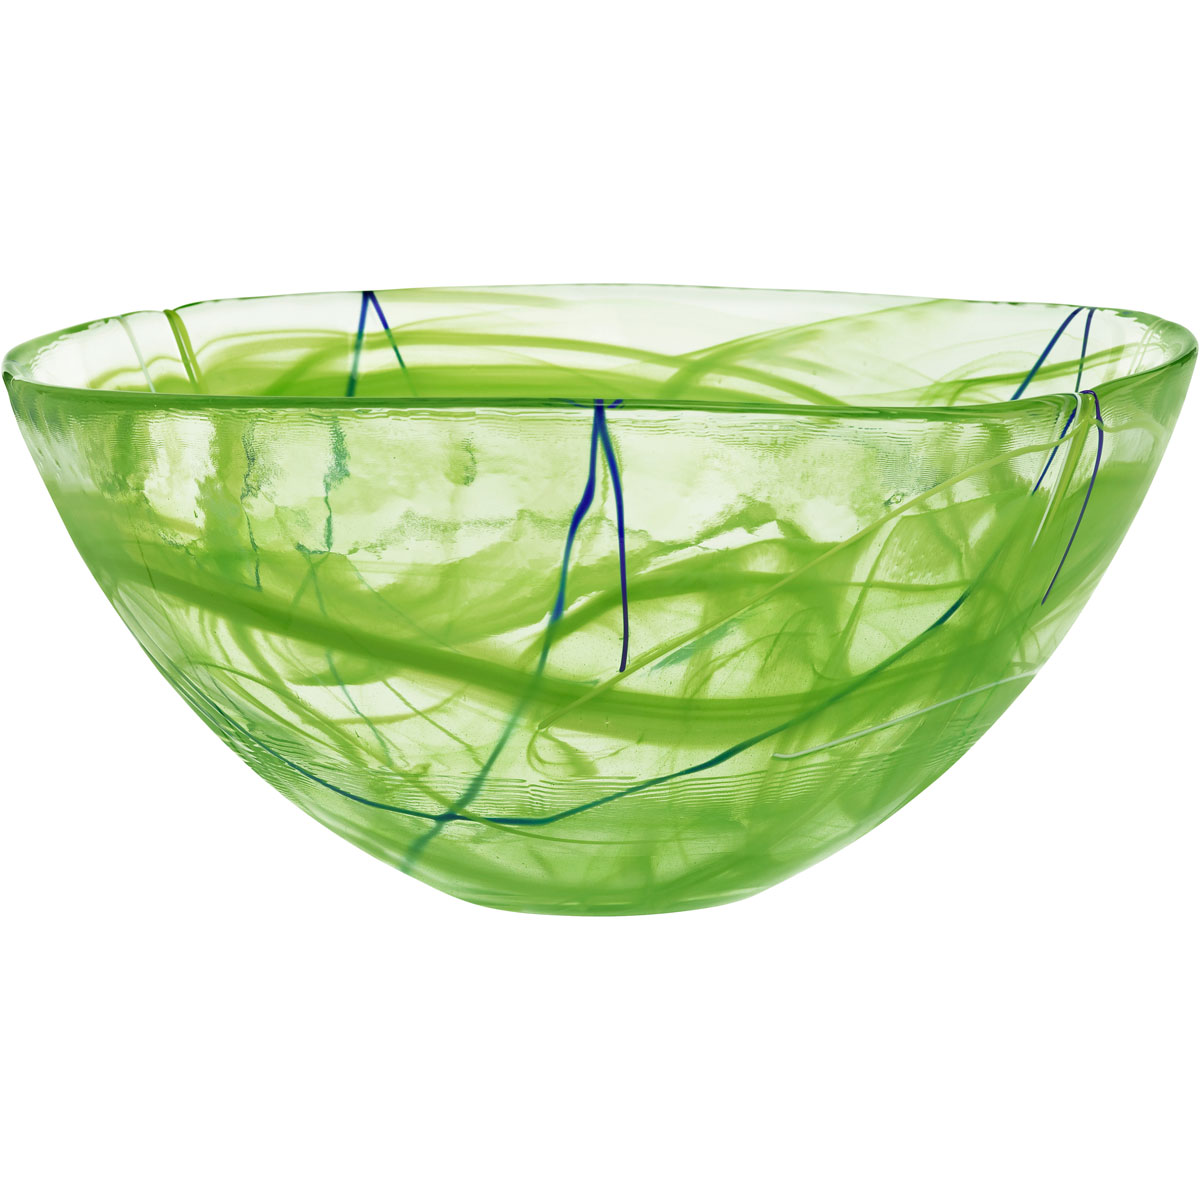 Kosta Boda Contrast Large Crystal Bowl, Lime